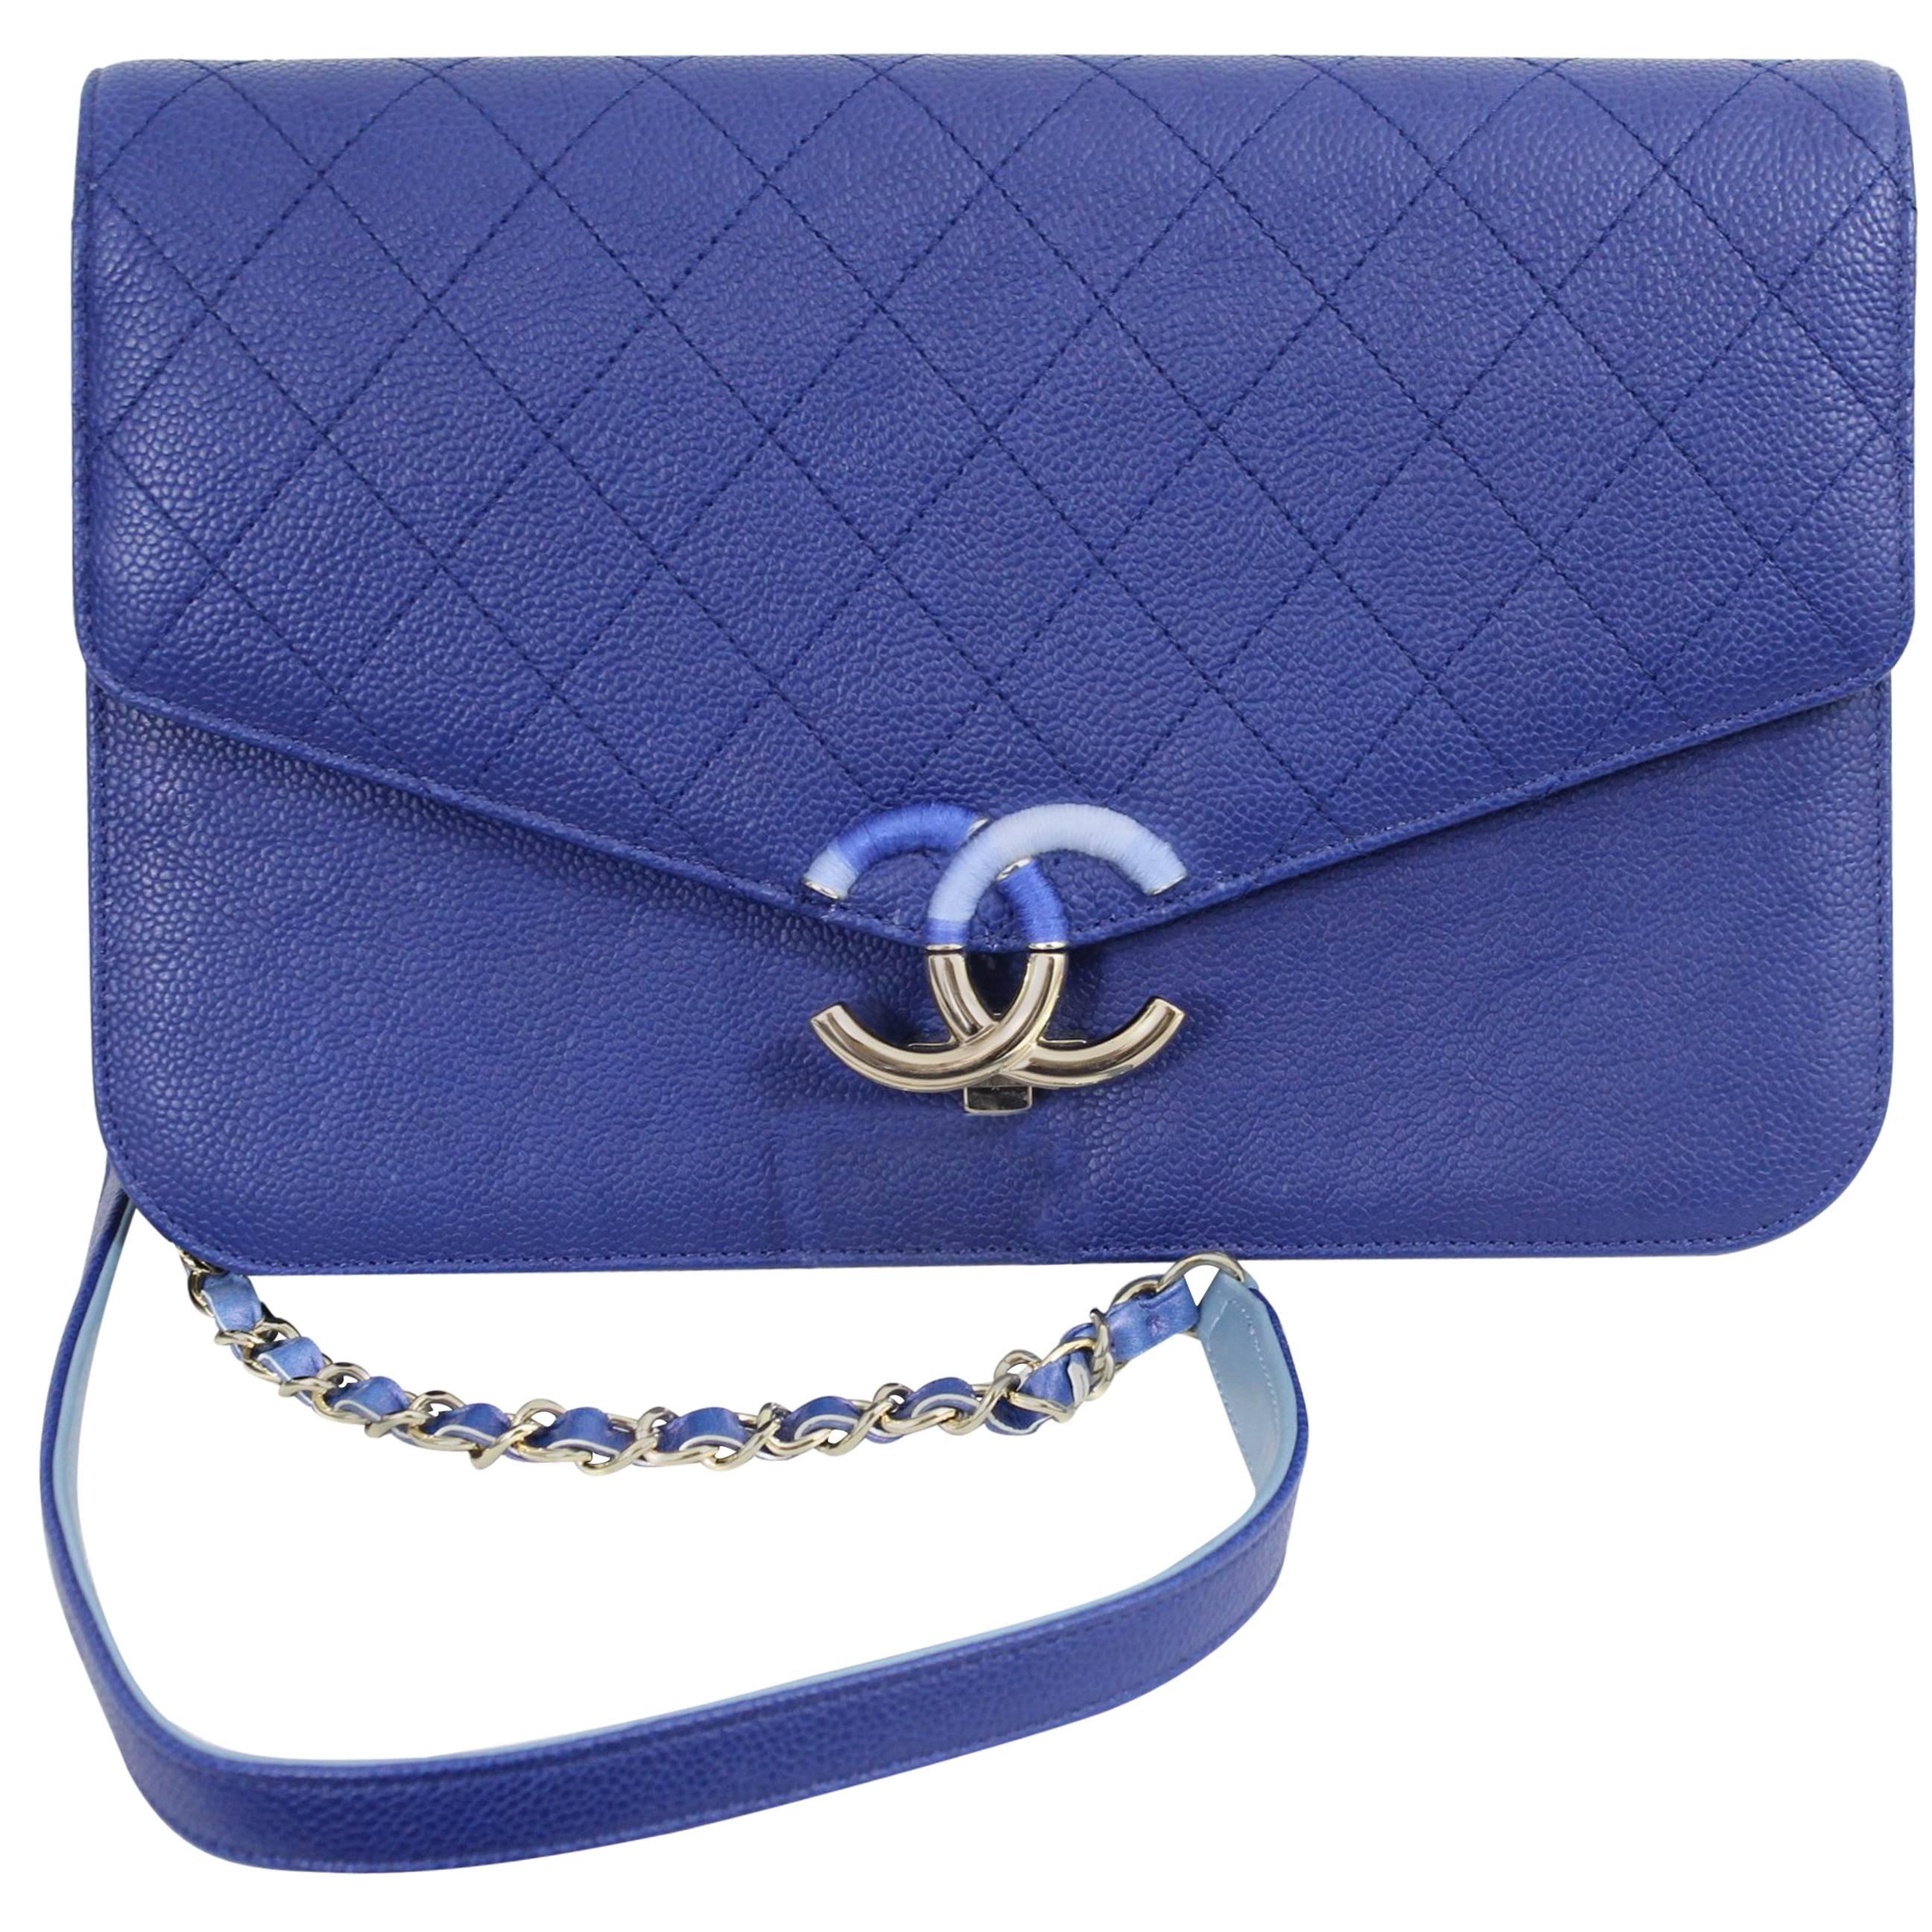 Chanel 2018  Blue grained Caviar leather Shoulder Bag